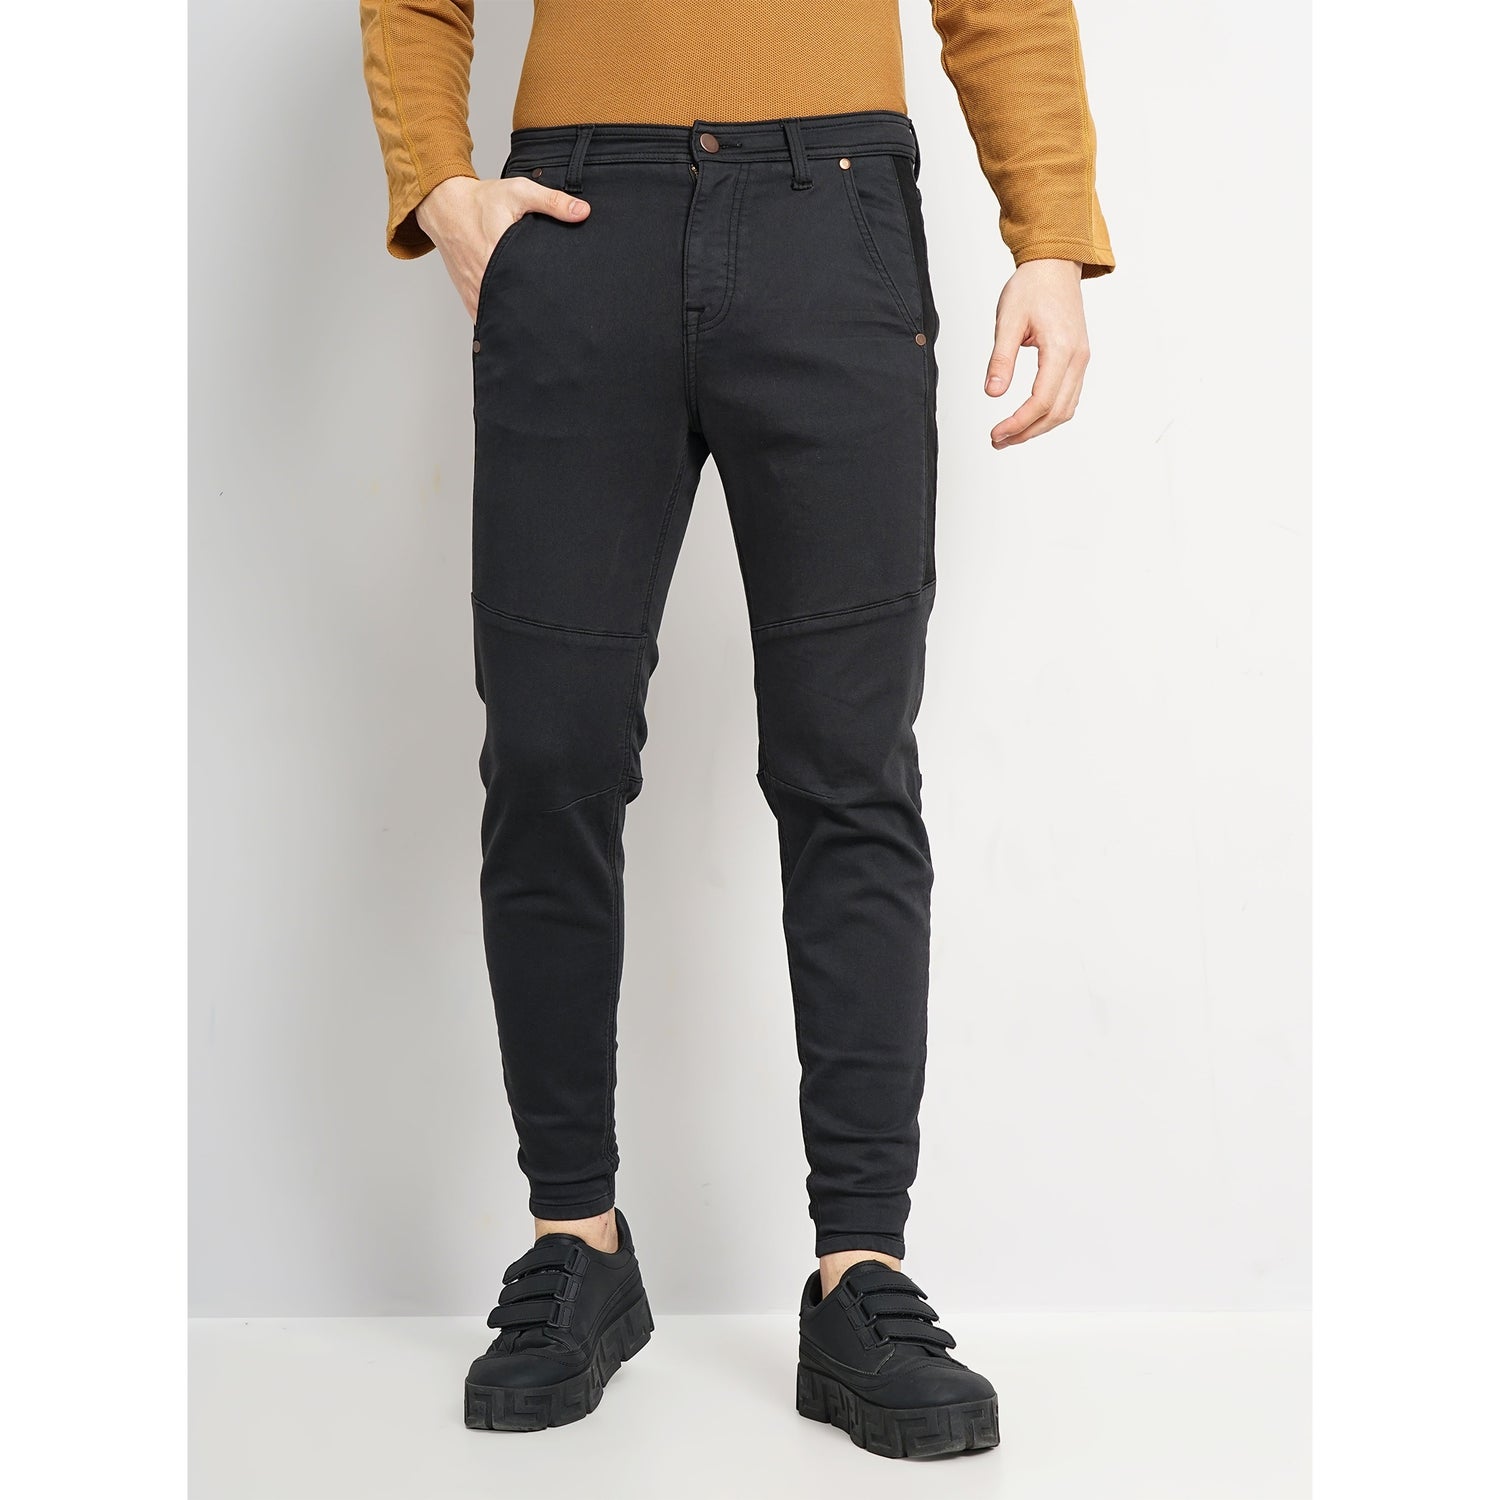 Men Black Solid Slim Fit Cotton Twill Denim Cargo Jeans (FOBIKE)